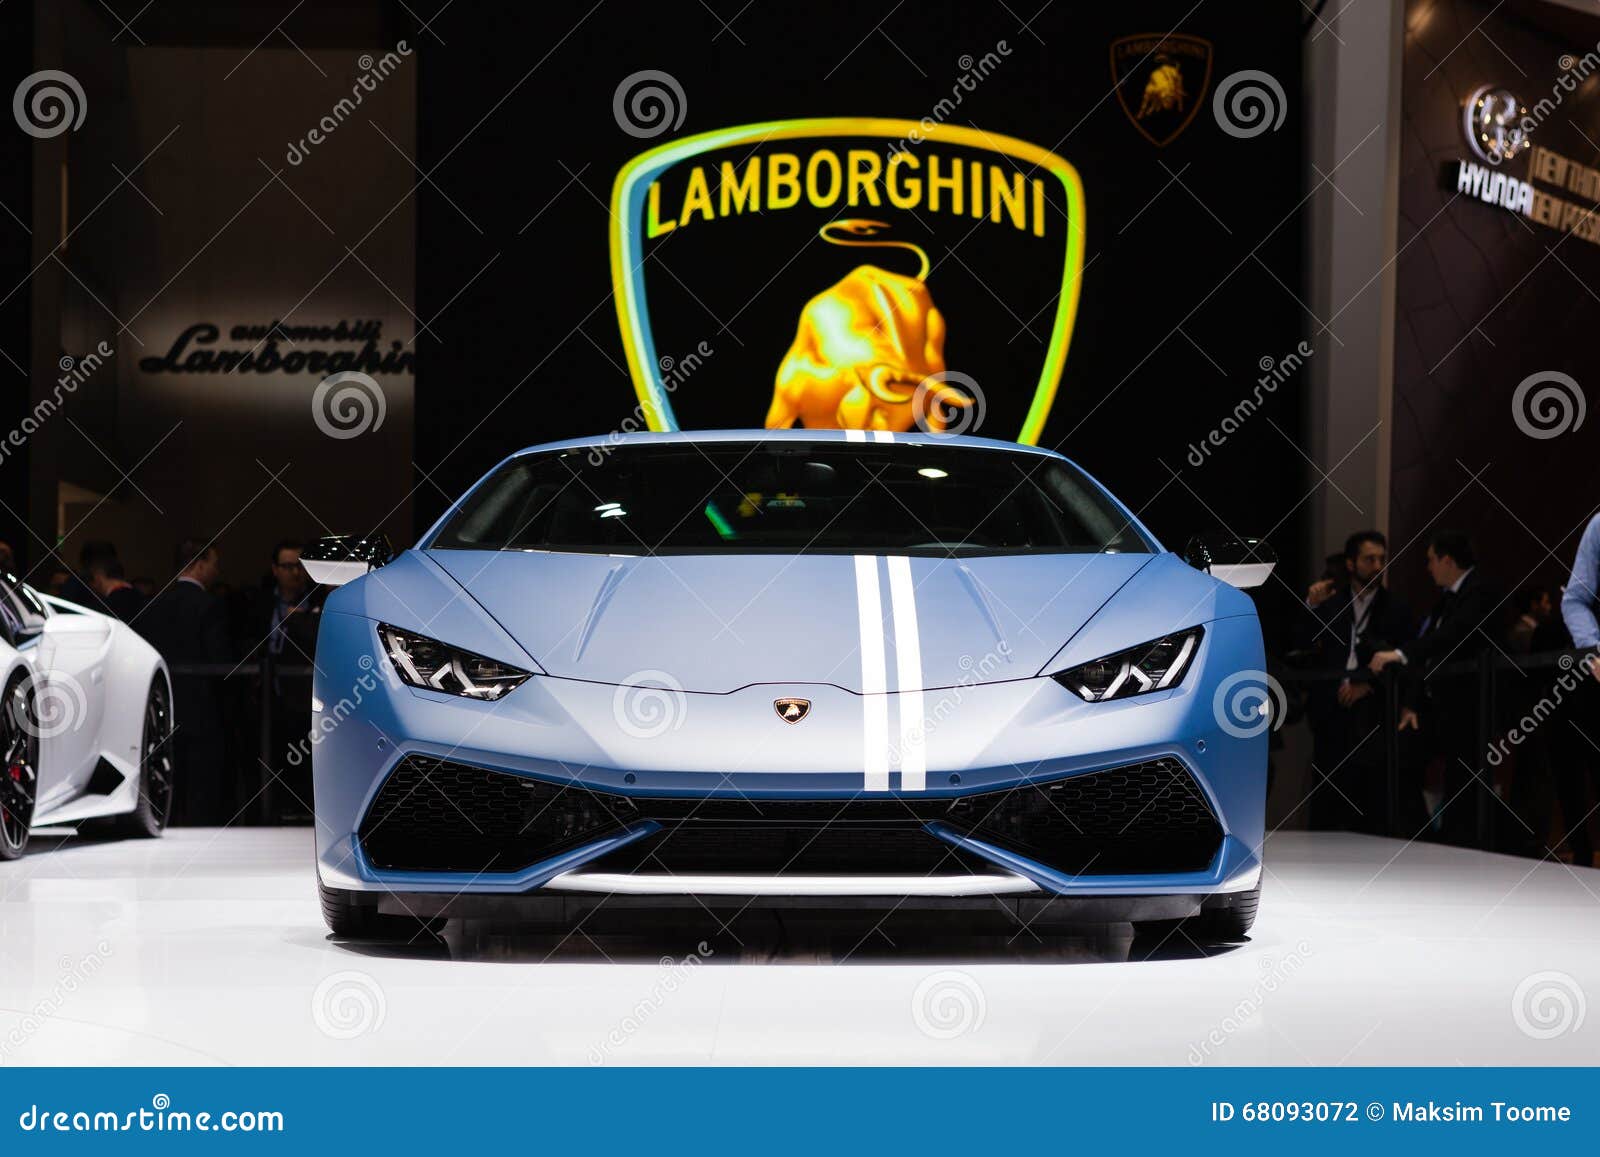 Lamborghini Huracan LP 610-4 Avio Editorial Photography ...